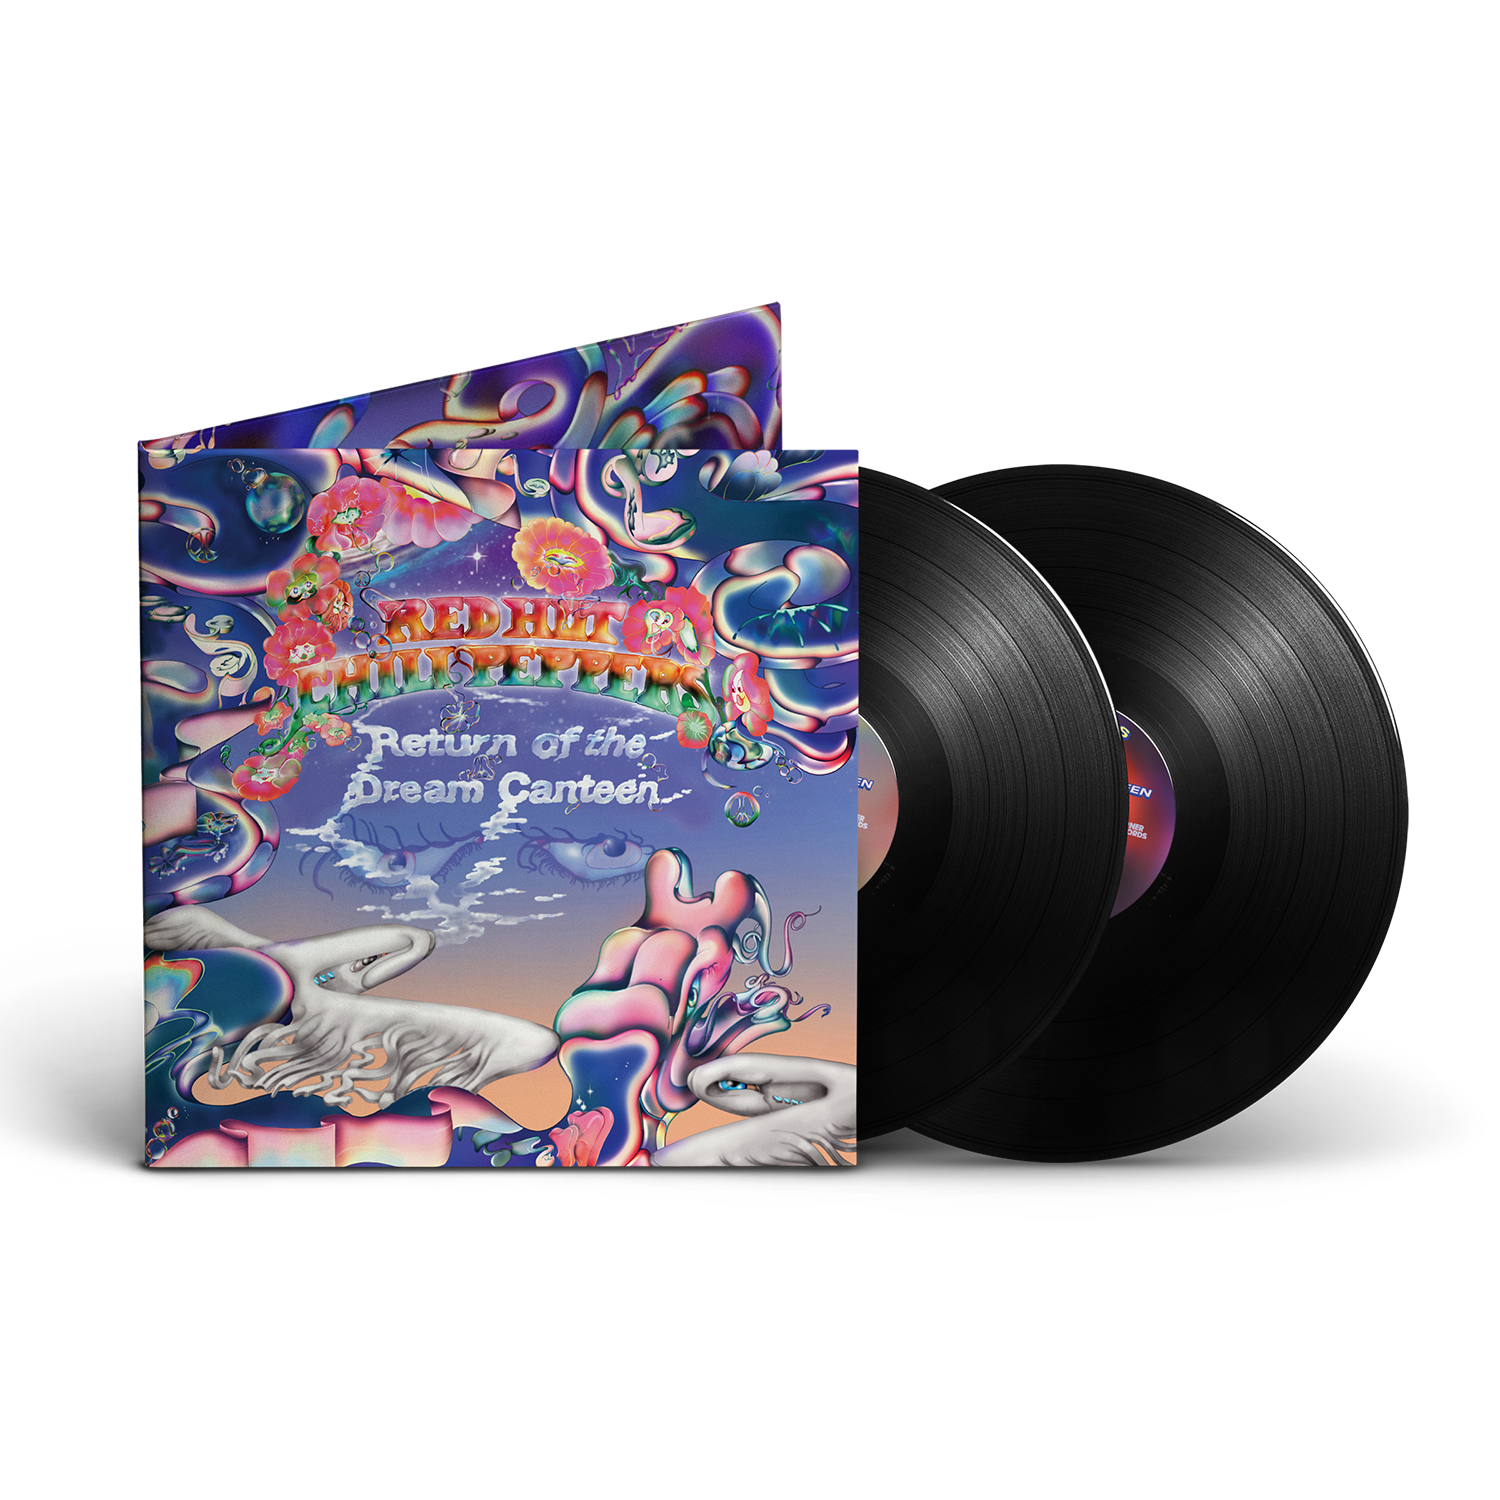 Dream Canteen Deluxe Vinyl 2LP – Red Hot Peppers